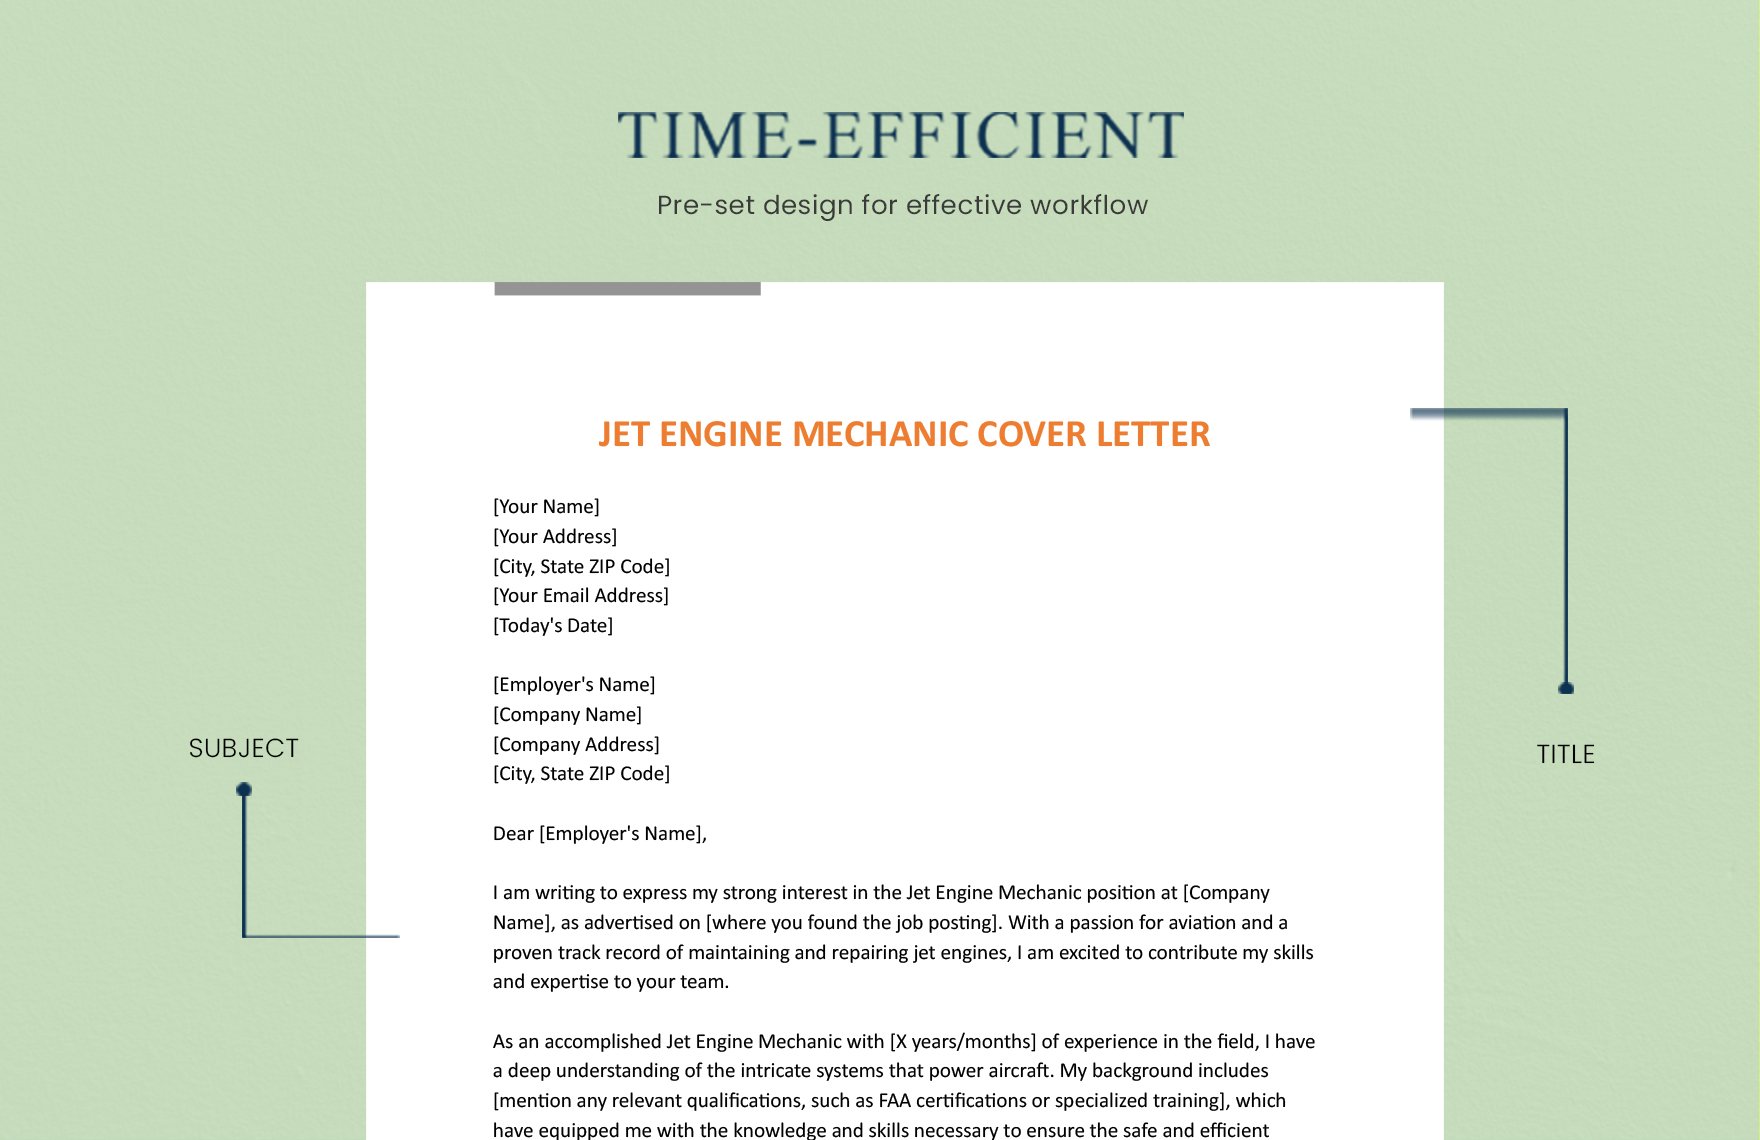 Jet Engine Mechanic Cover Letter